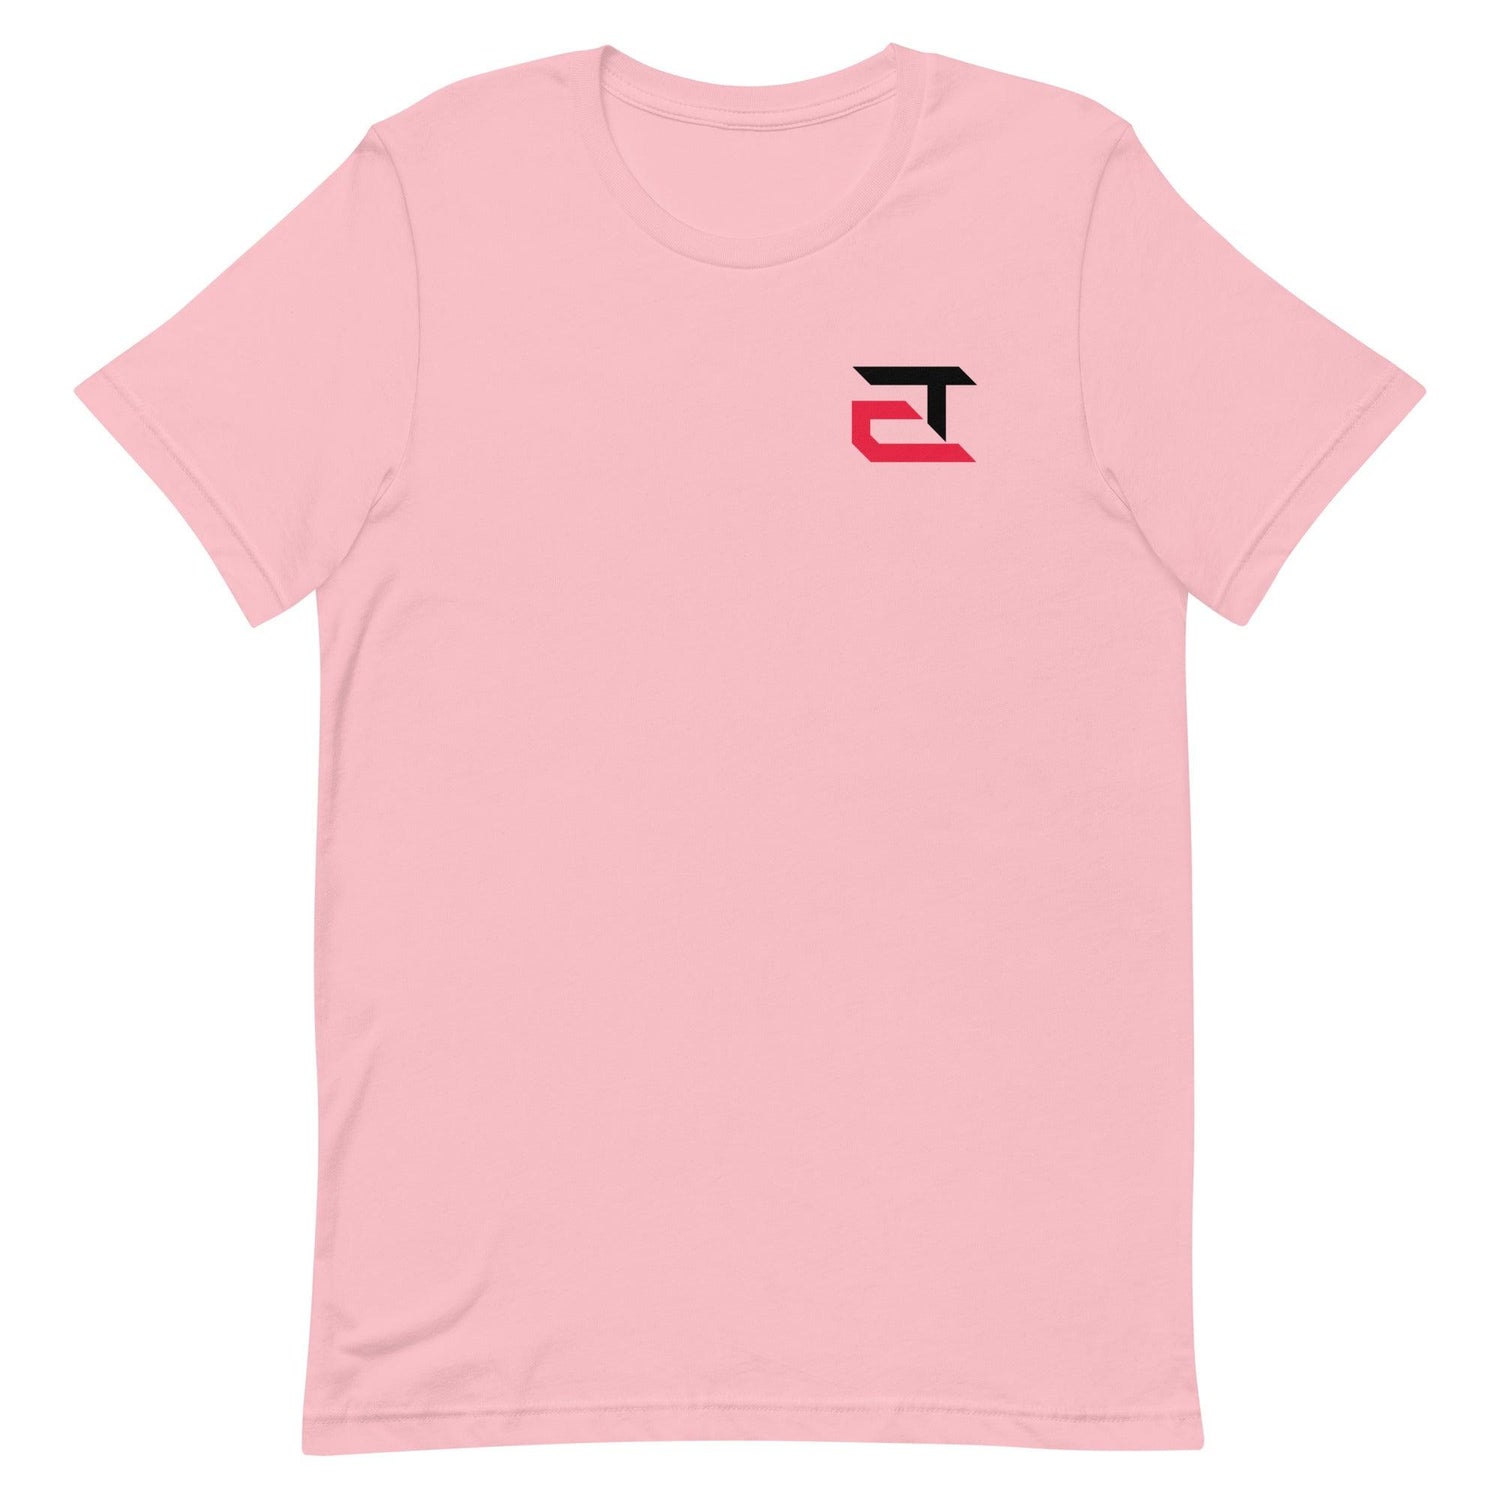 Evan Tengesdahl "Essential" t-shirt - Fan Arch